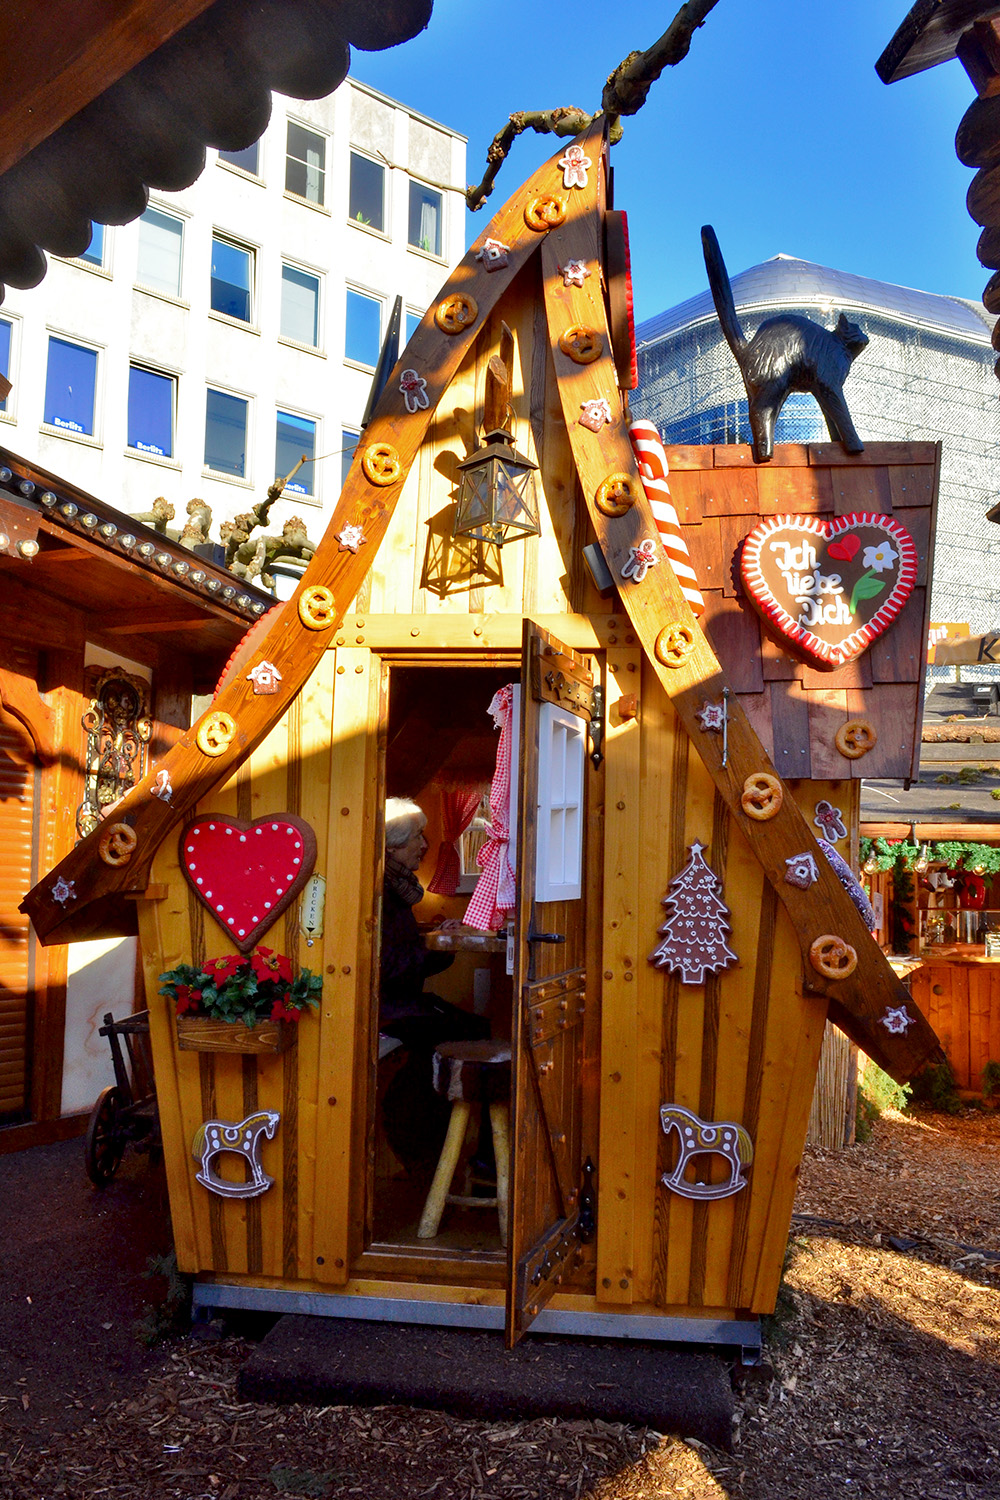 Adorable Hut at Kassel Weihnachtsmarkt - A Fairy Tale German Christmas Market :: I've Been Bit! A Travel Blog